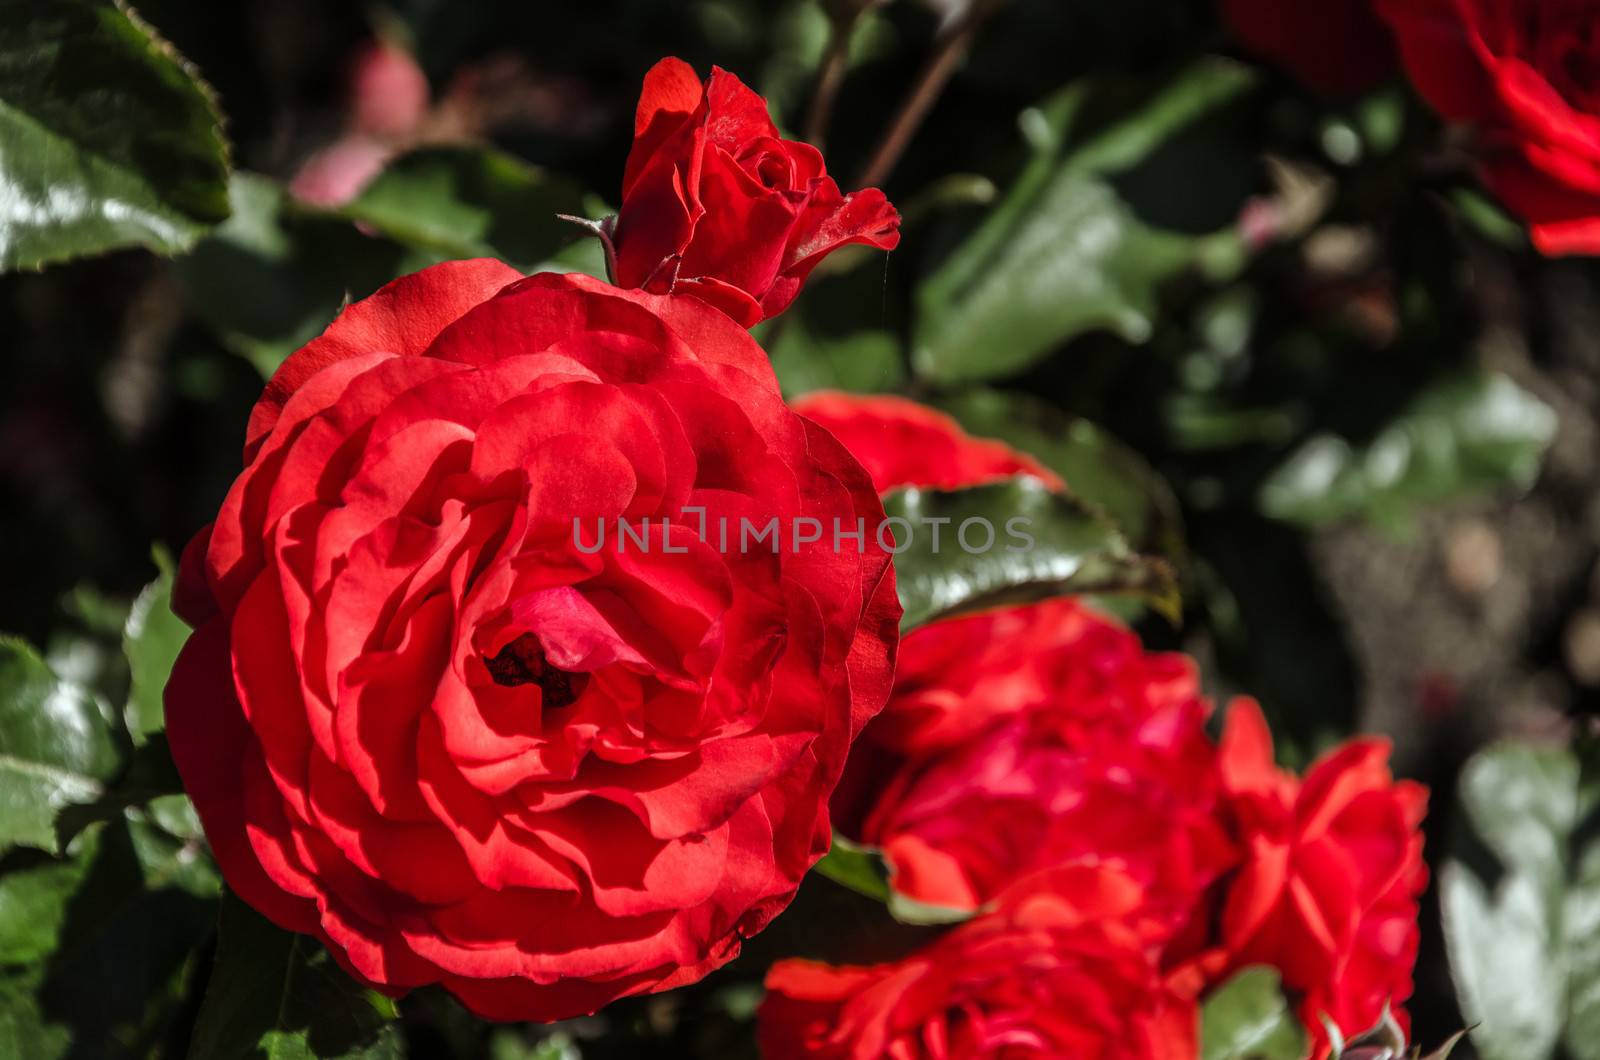 A red rose in the International Rose Test Garden in Portland, Oregon